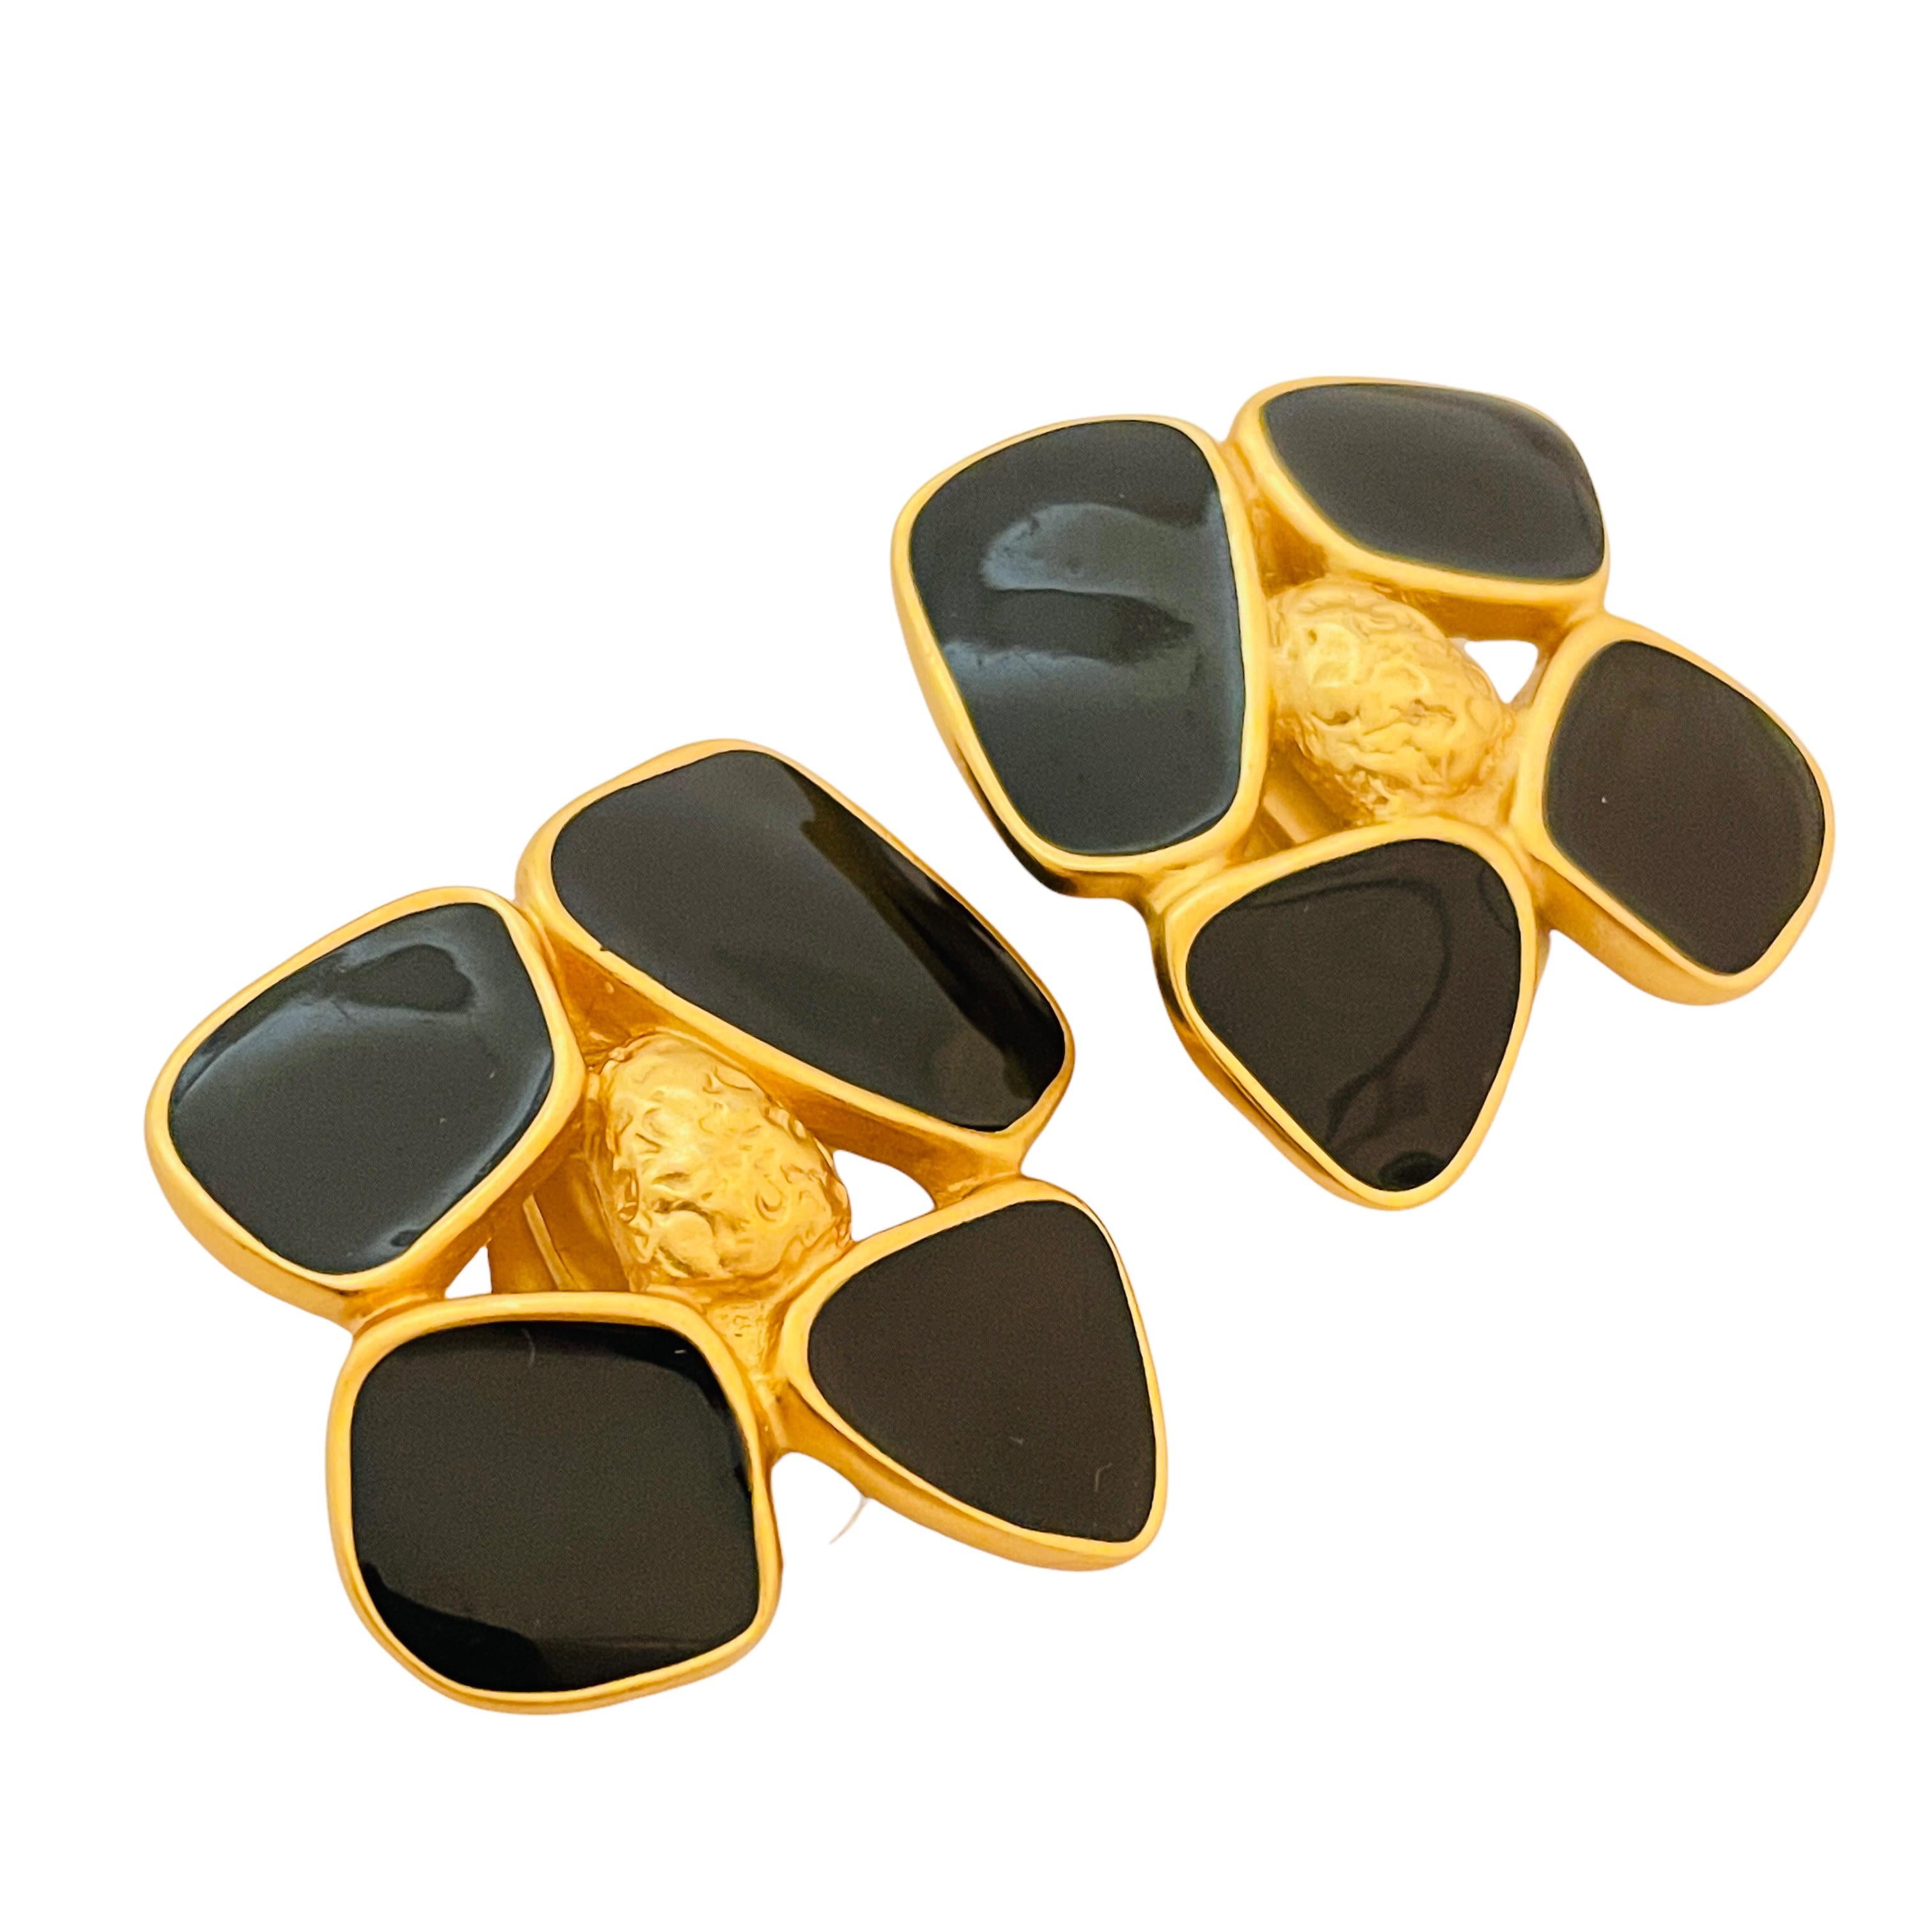 DETAILS

• unsigned ANNE KLEIN

• gold tone with black enamel

• vintage designer runway earrings

MEASUREMENTS

• 1.5